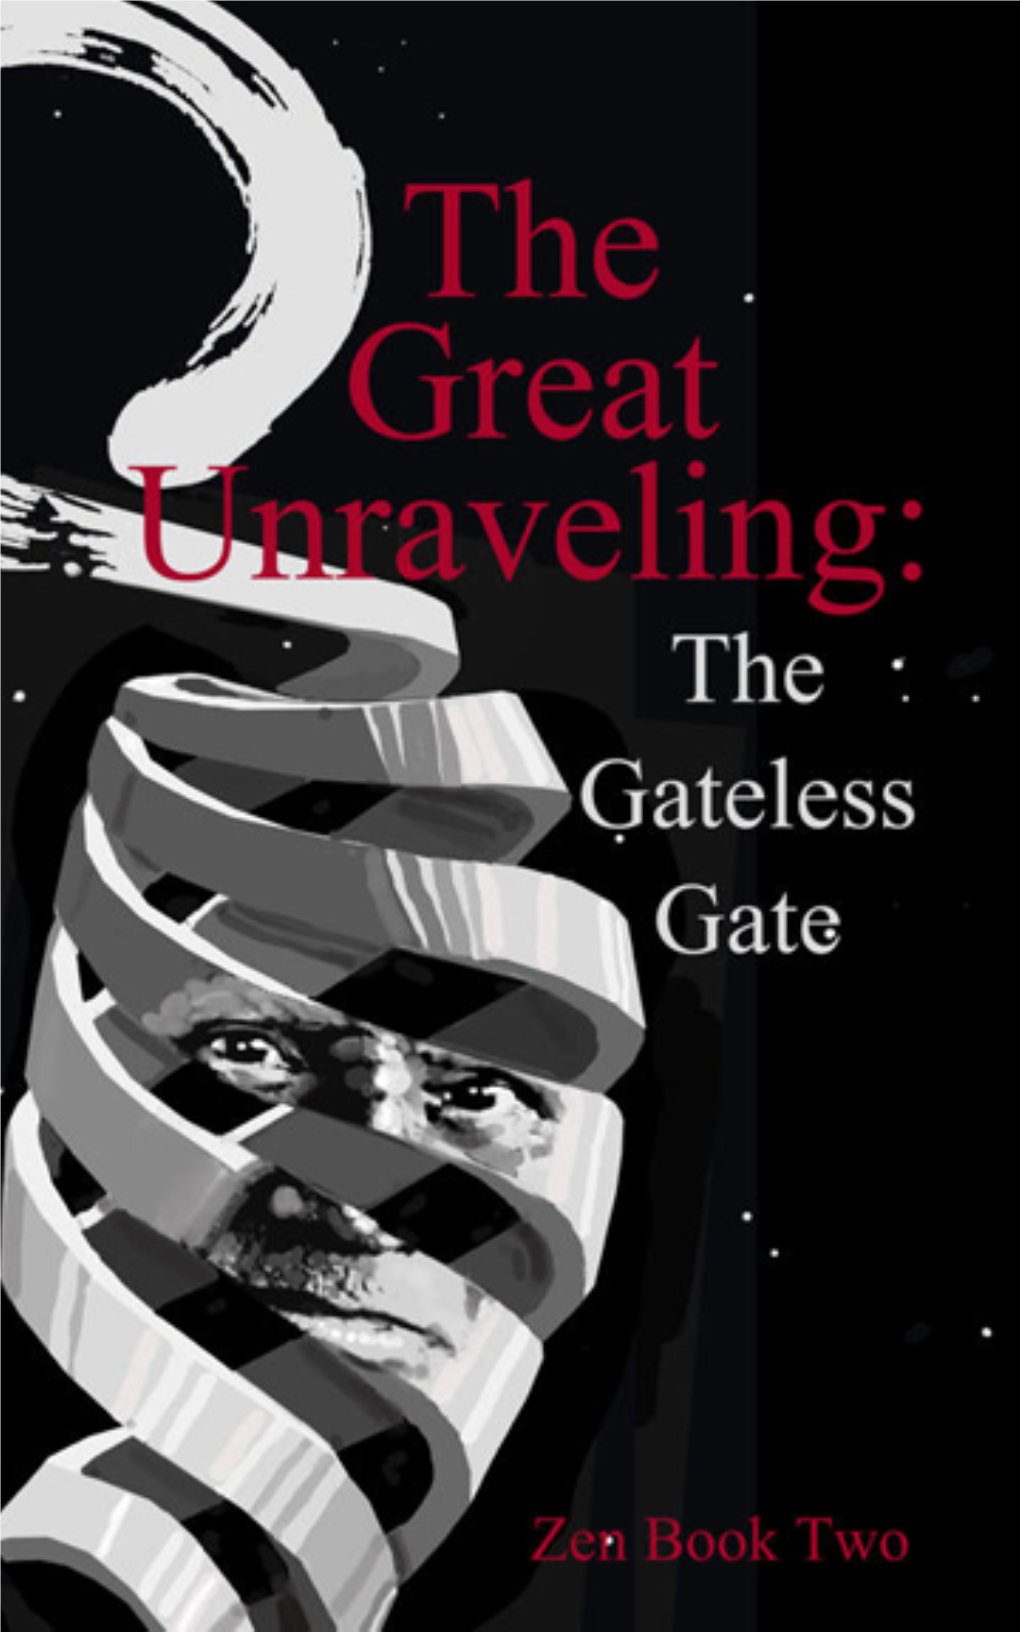 The Gateless Gate Copyright 2010 Stephen H